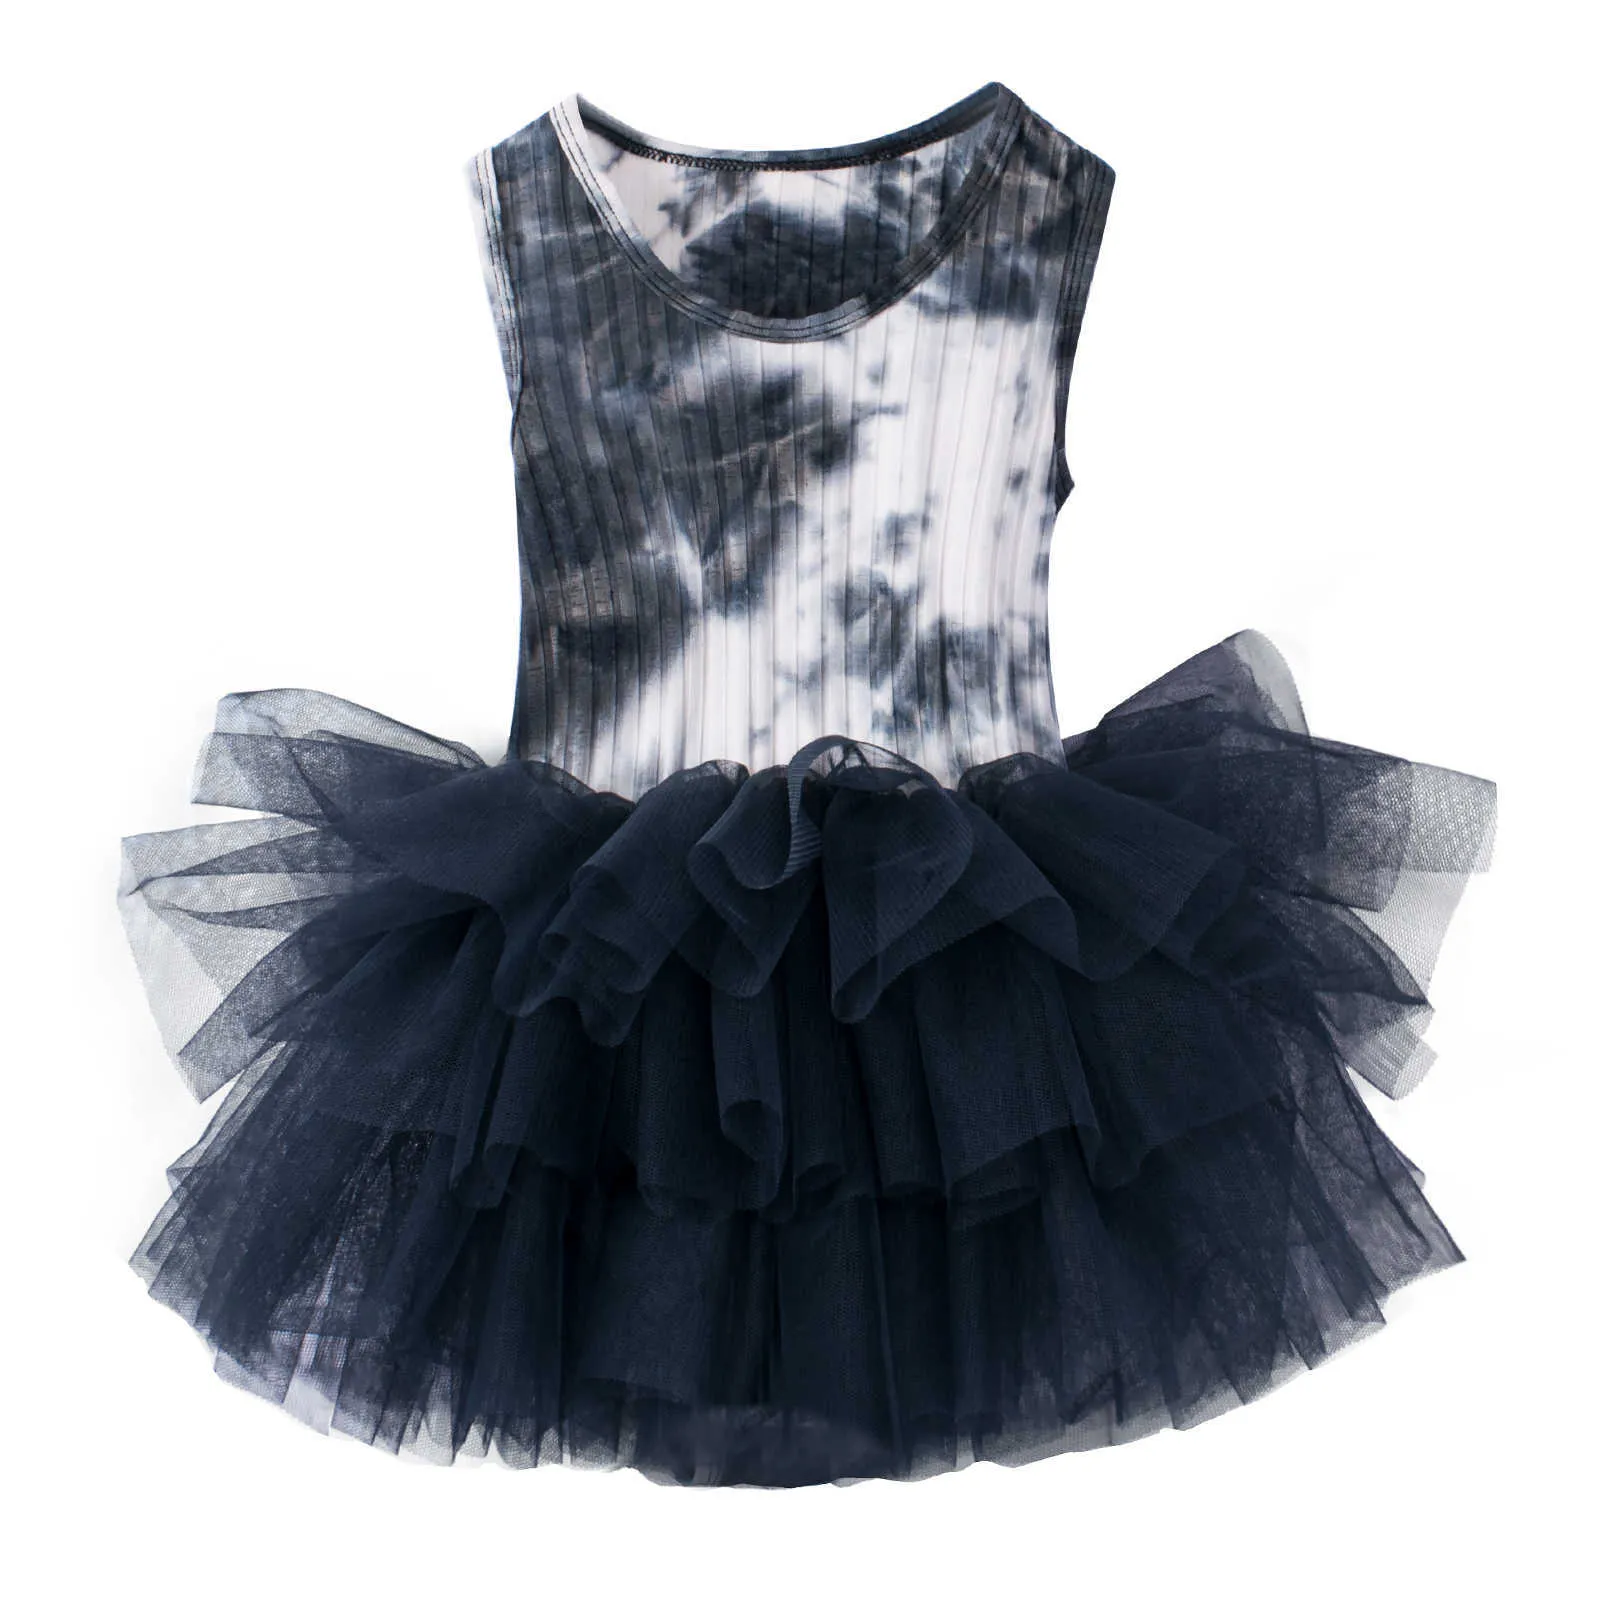 Girls Tutu Dress Fashion Tie Dye Mesh Ballet Performance Kids Romper for 2 3 4 5 6 Year 2021 New Summer Children Clothing Q0716